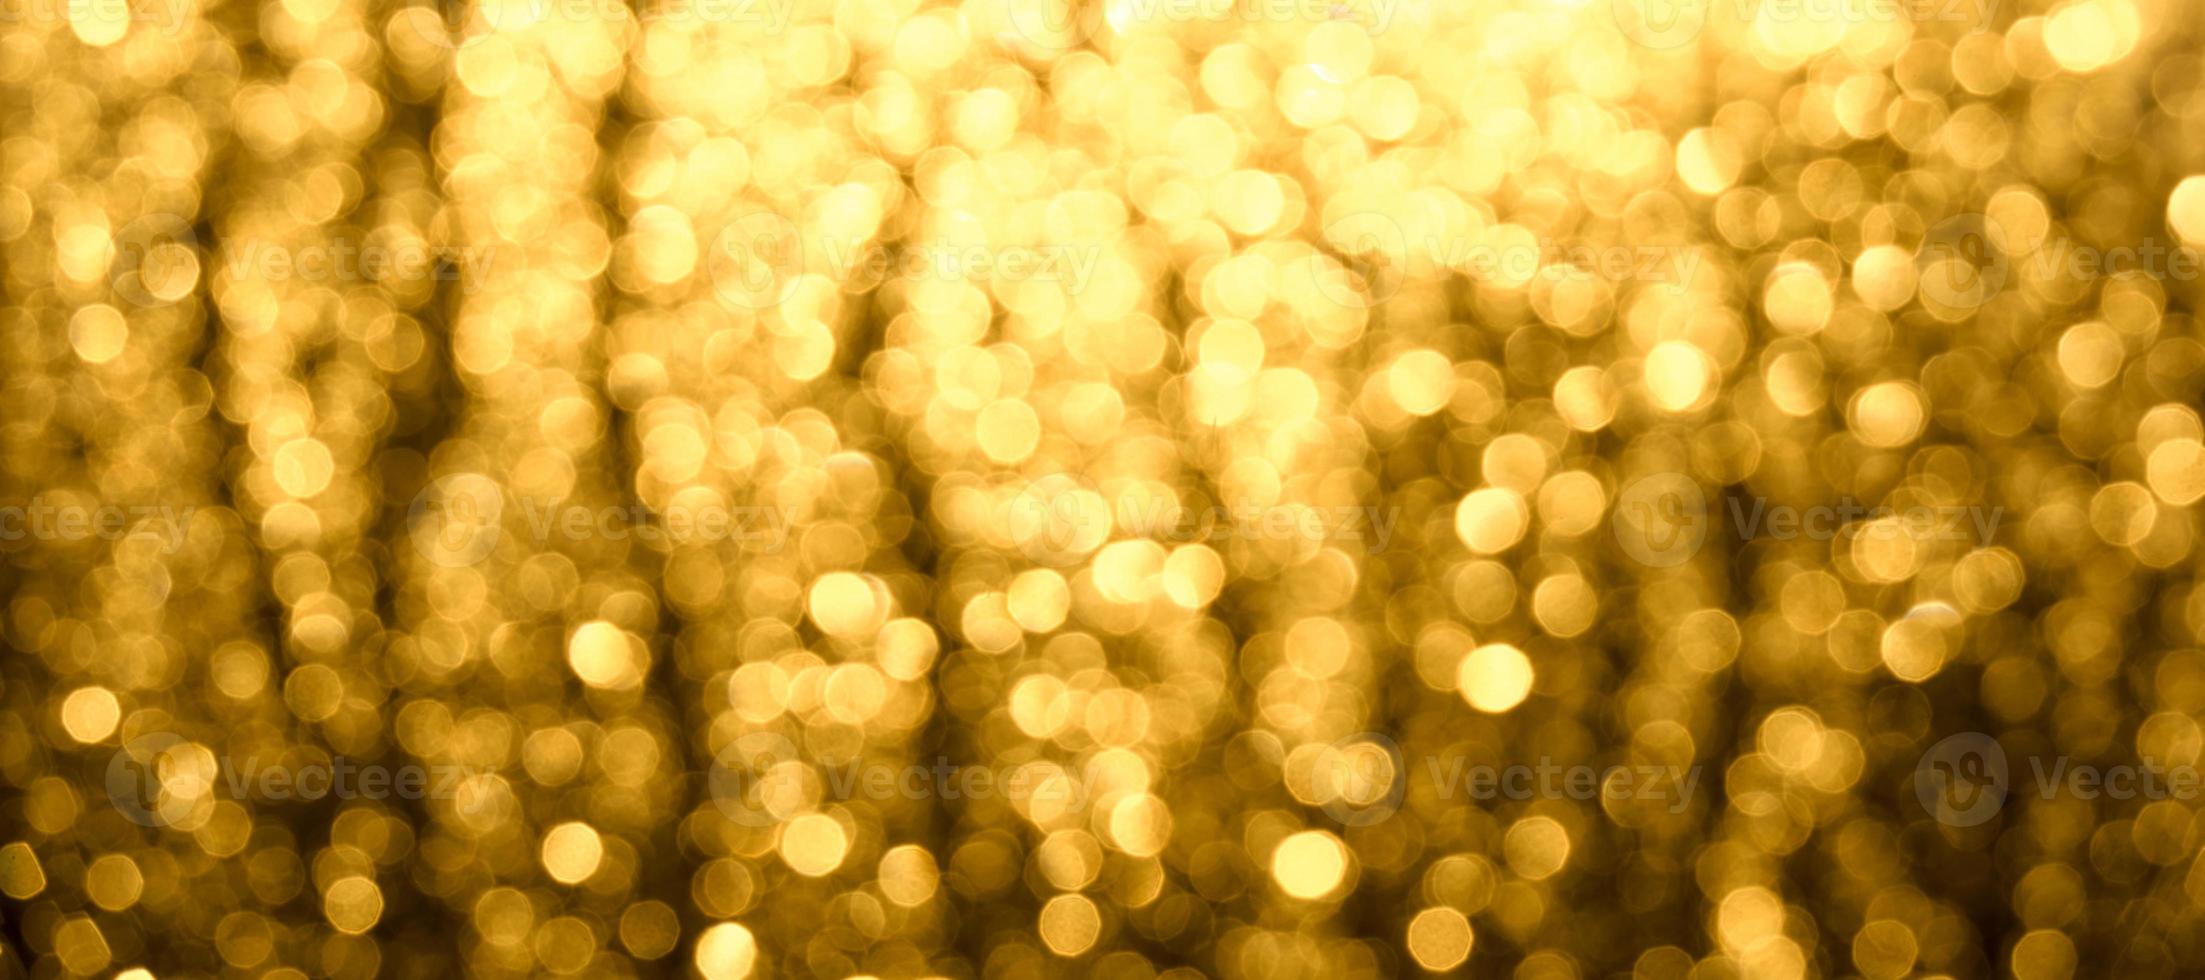 abstrakt jul suddig bakgrund. en gyllenbrun glöd av bokeh. foto